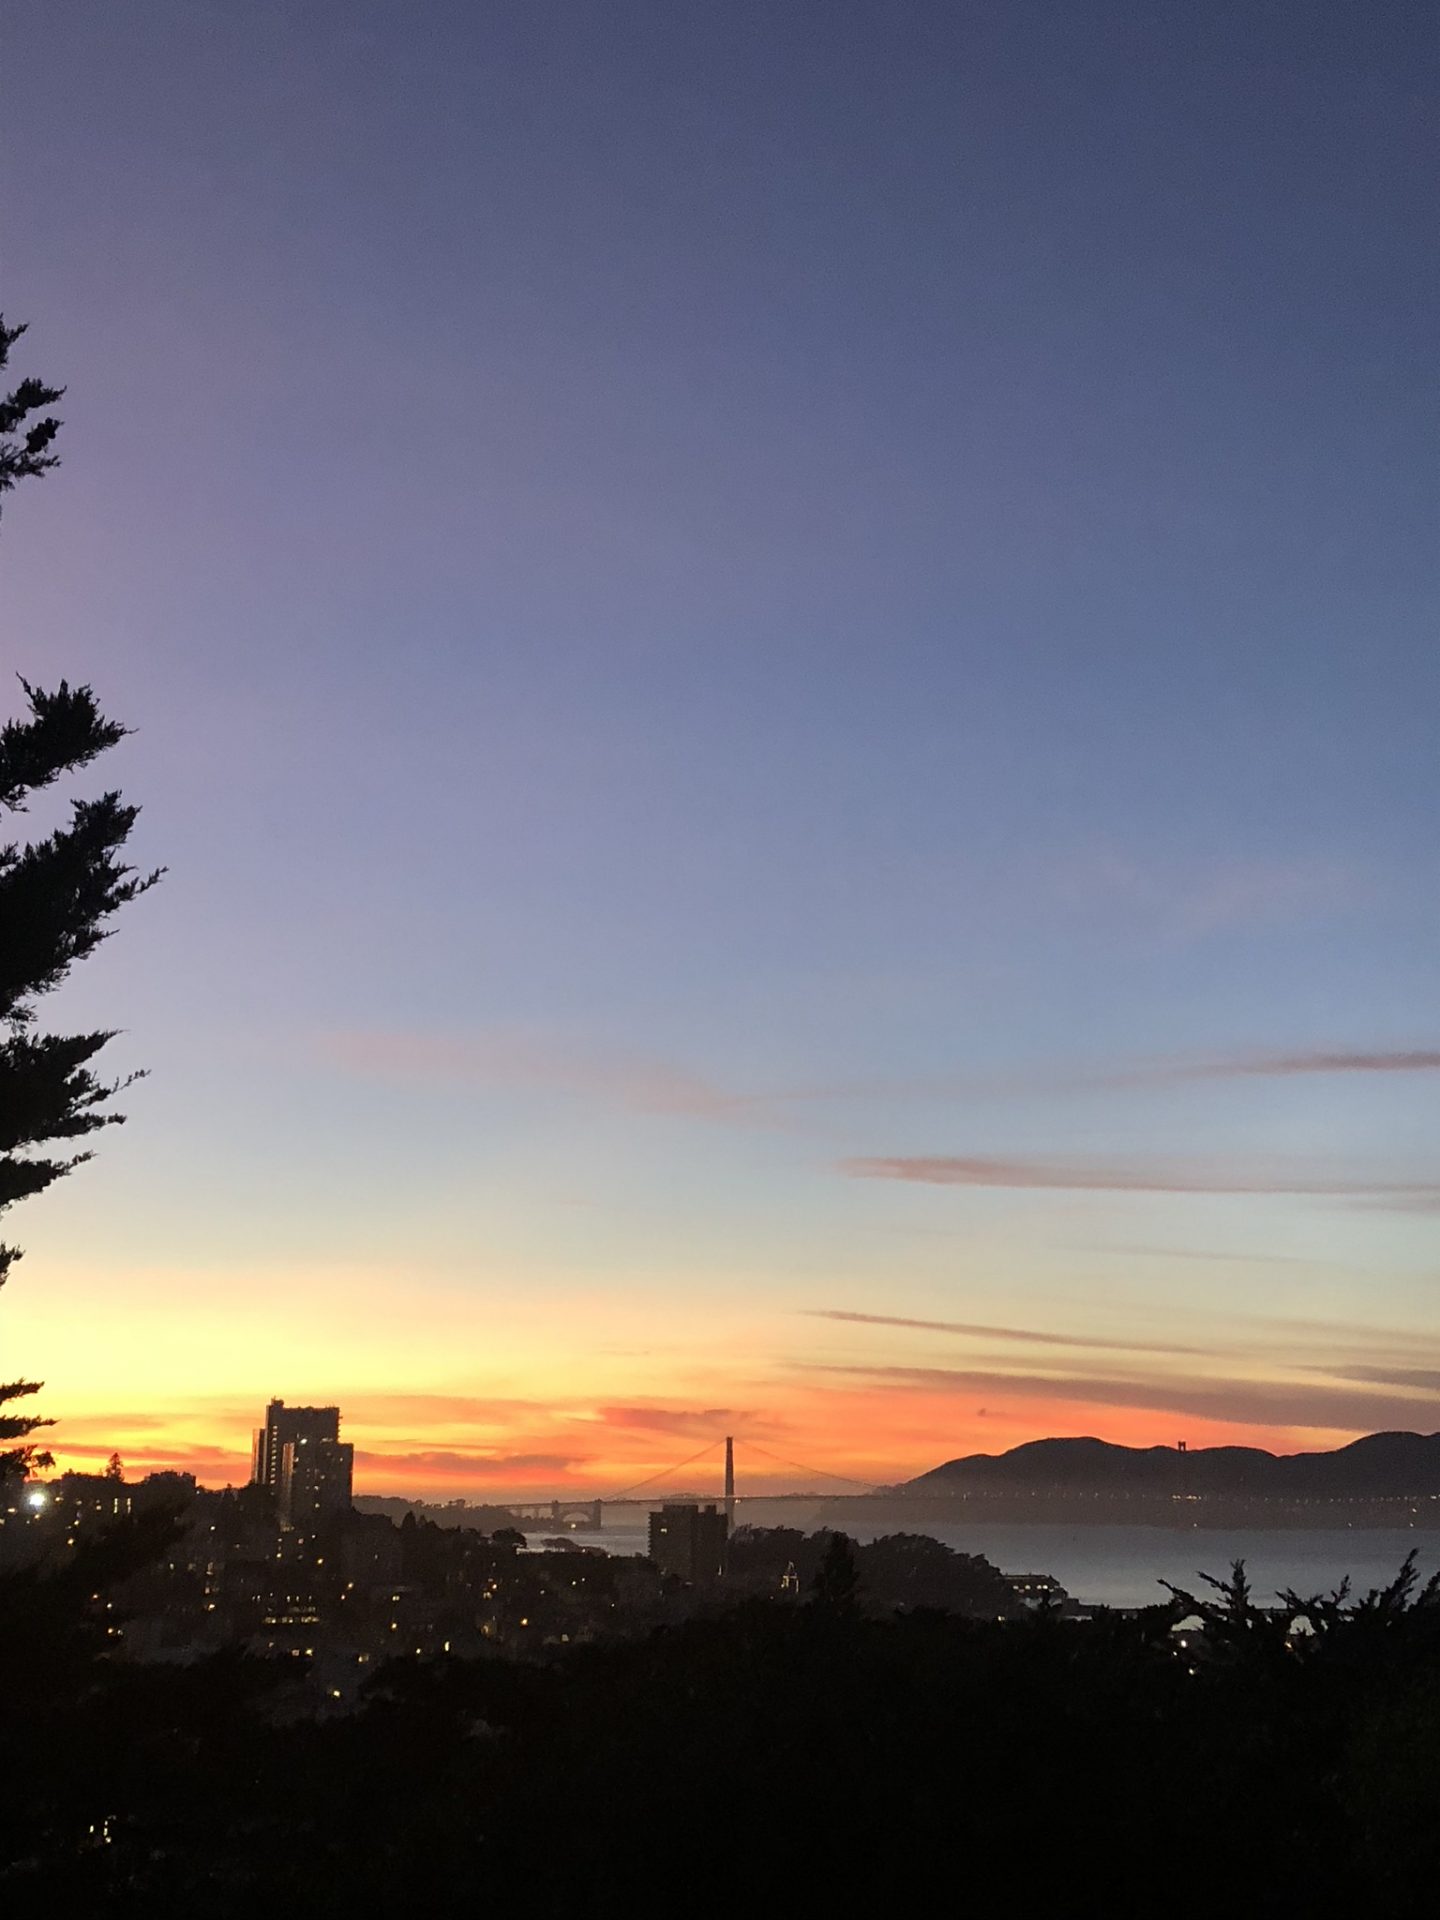 Sunset over the Golden Gate Bridge, San Francisco